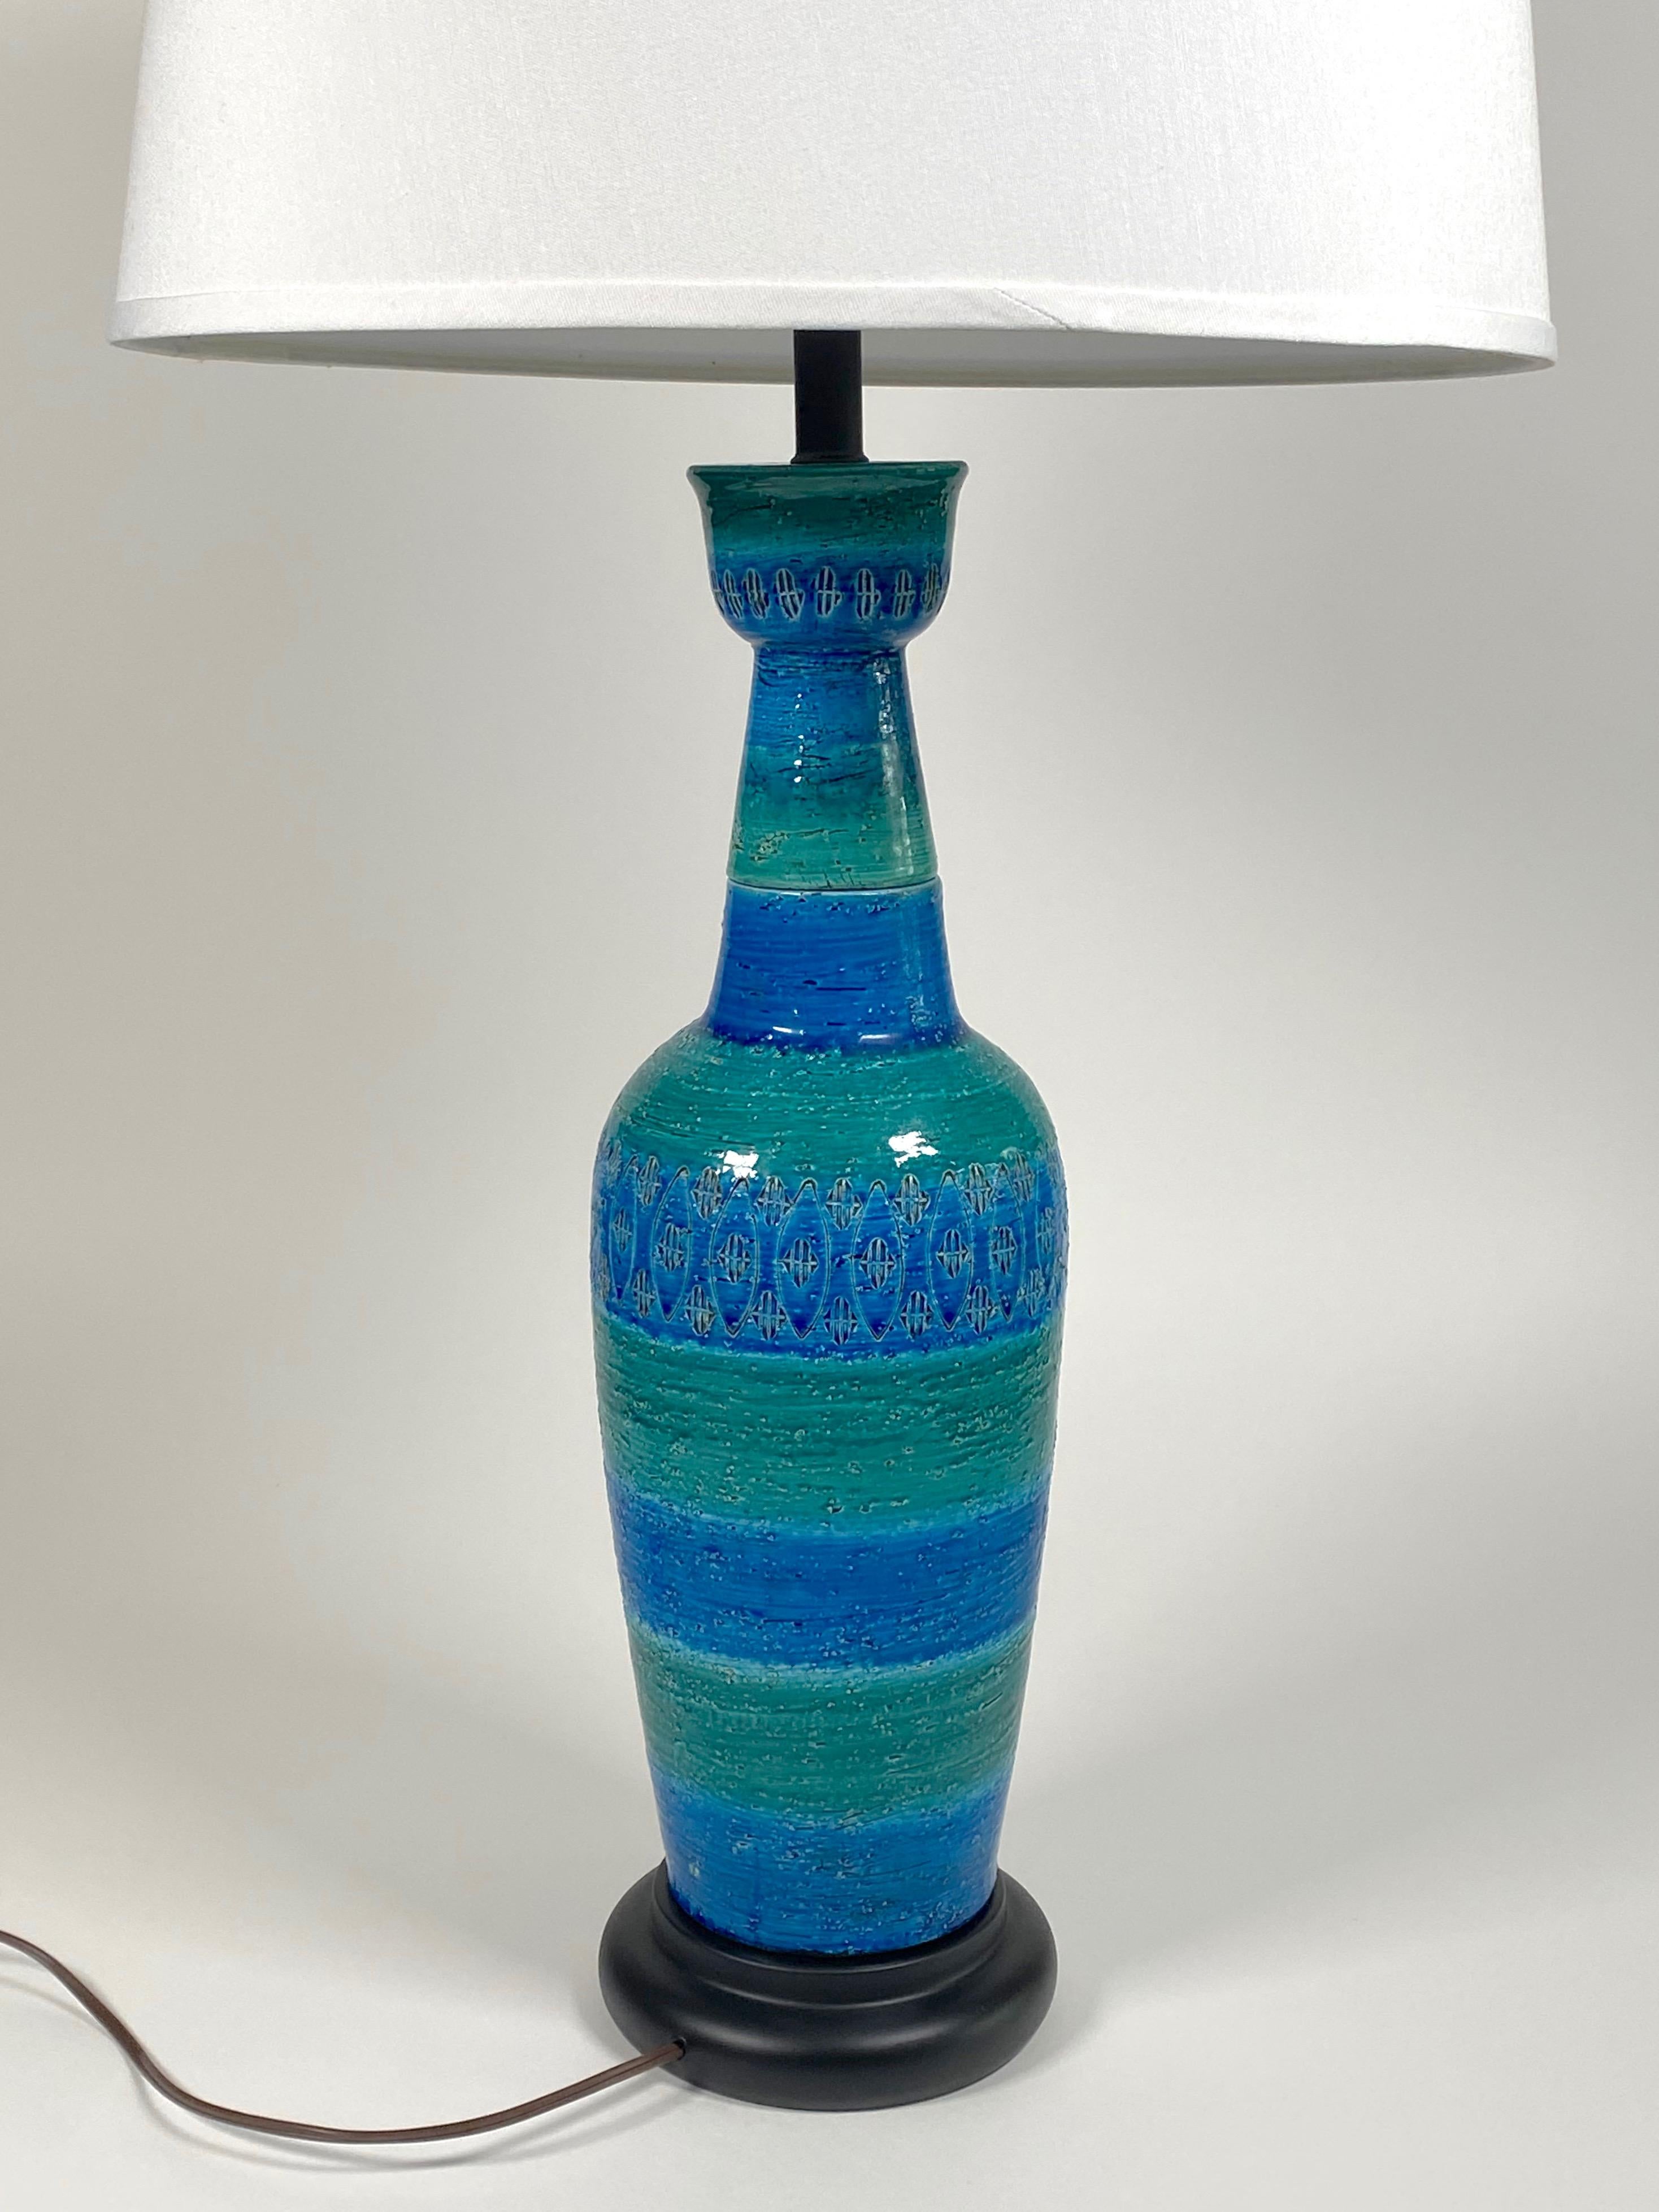 Aldo Londi for Bistossi of Italy Ceramic Table Lamp In Good Condition For Sale In Oakland, CA